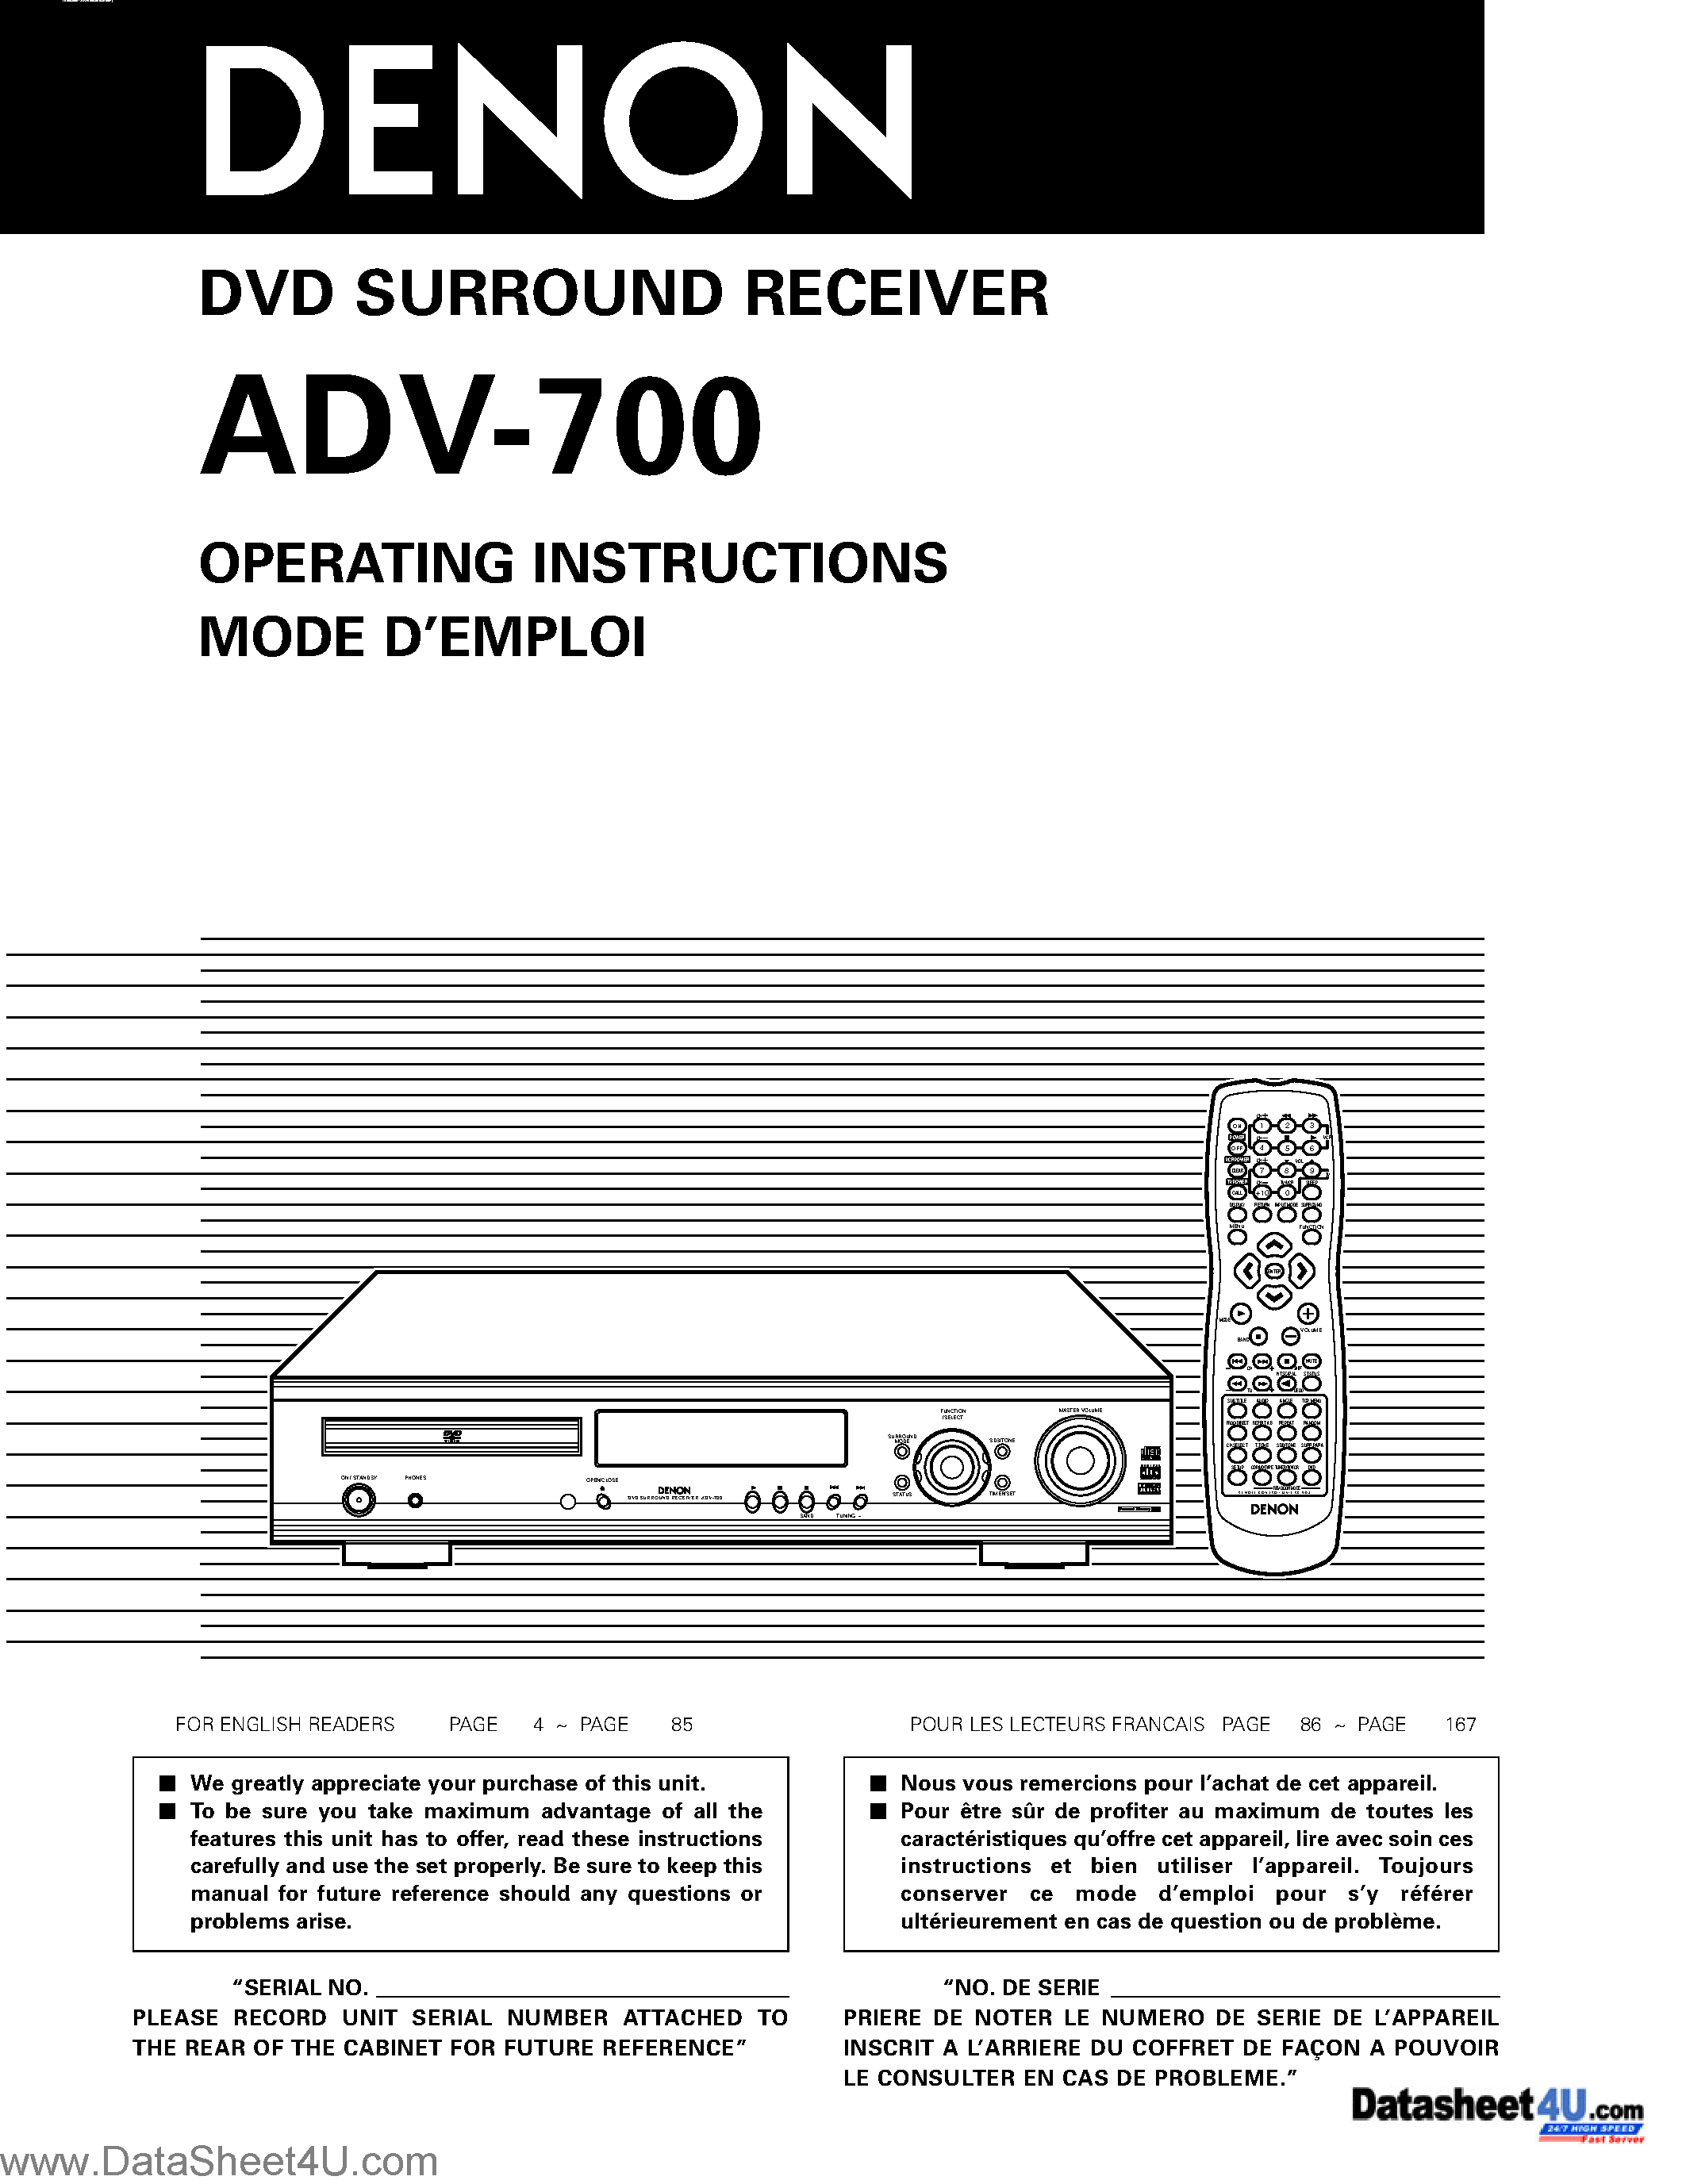 Даташит ADV-700 - DVD Surround Receiver страница 1